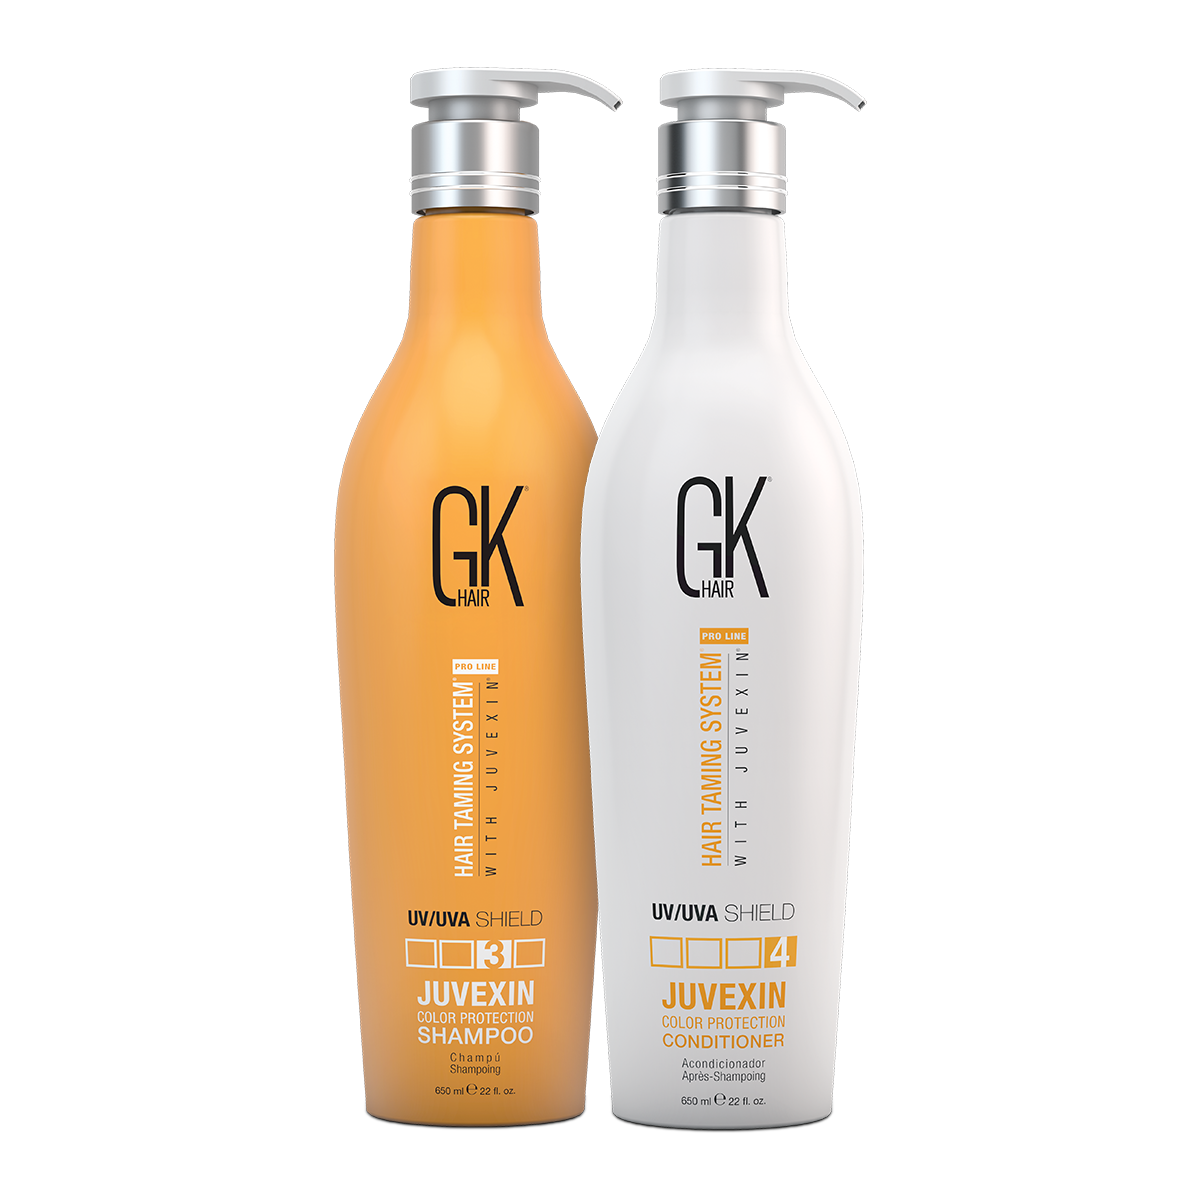 svimmel samfund tang Shop Shield Shampoo and Conditioner from GK Hair – GK Hair USA